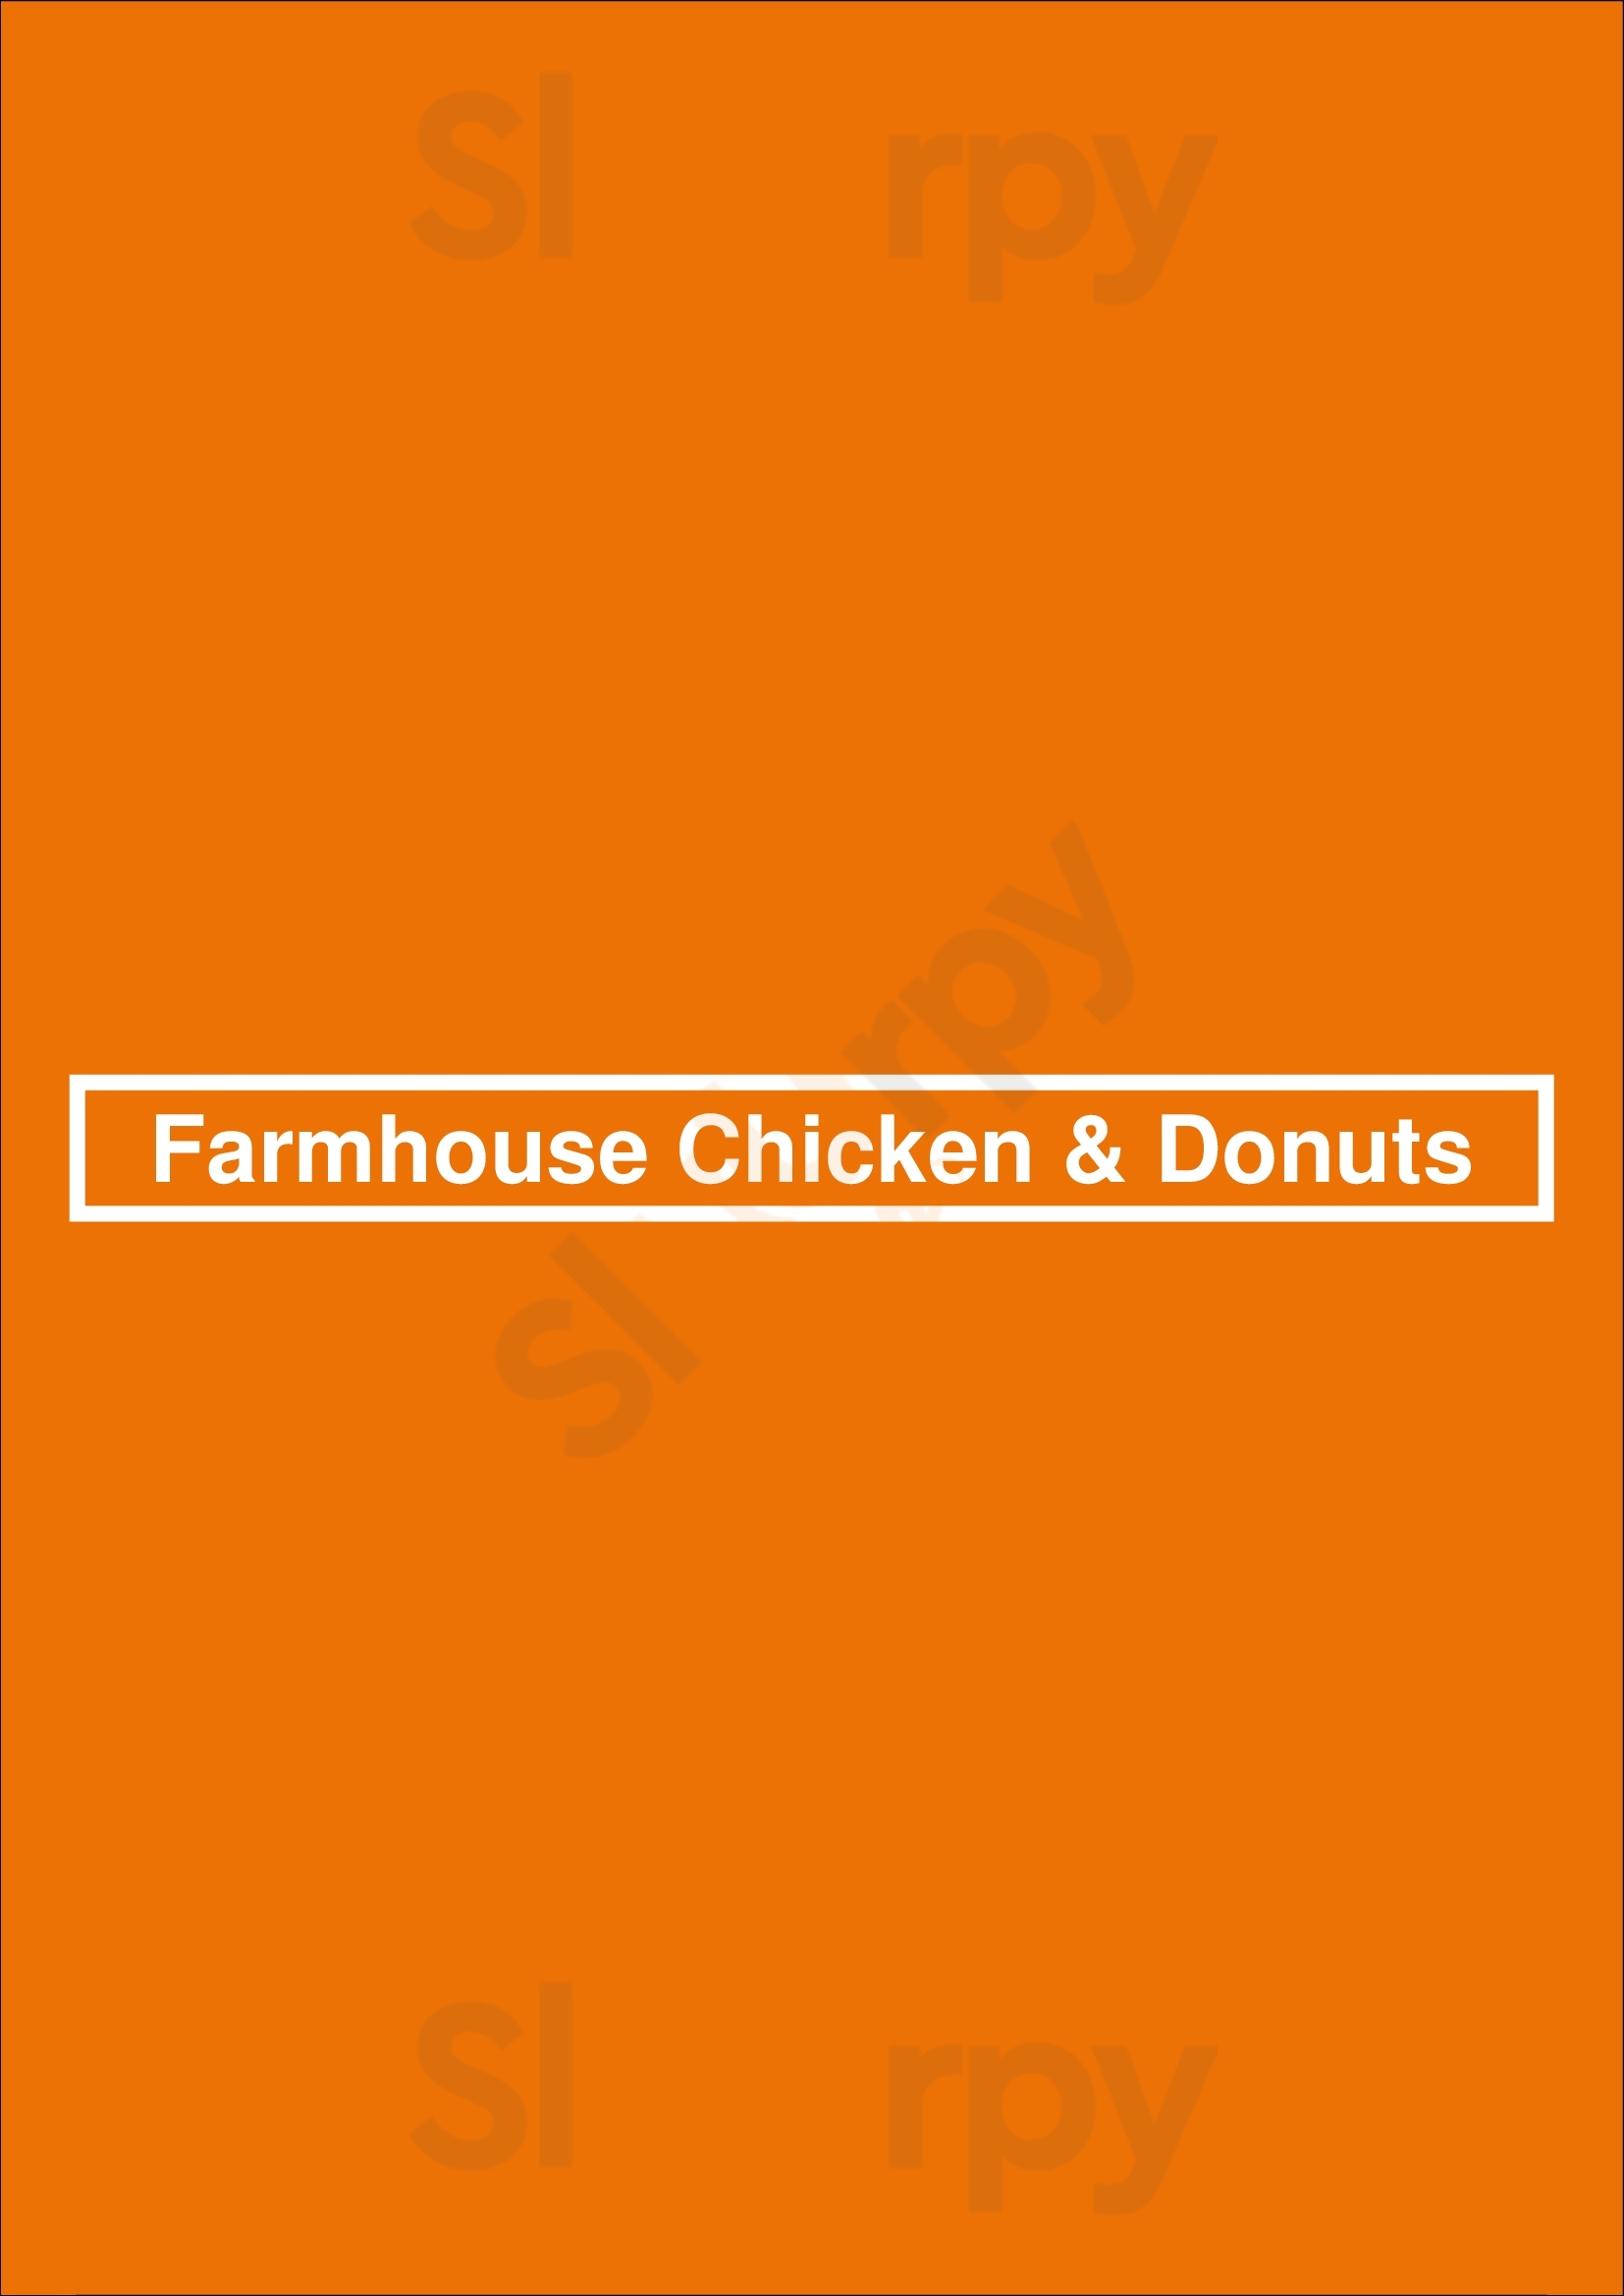 Farmhouse Chicken & Donuts Middleburg Menu - 1